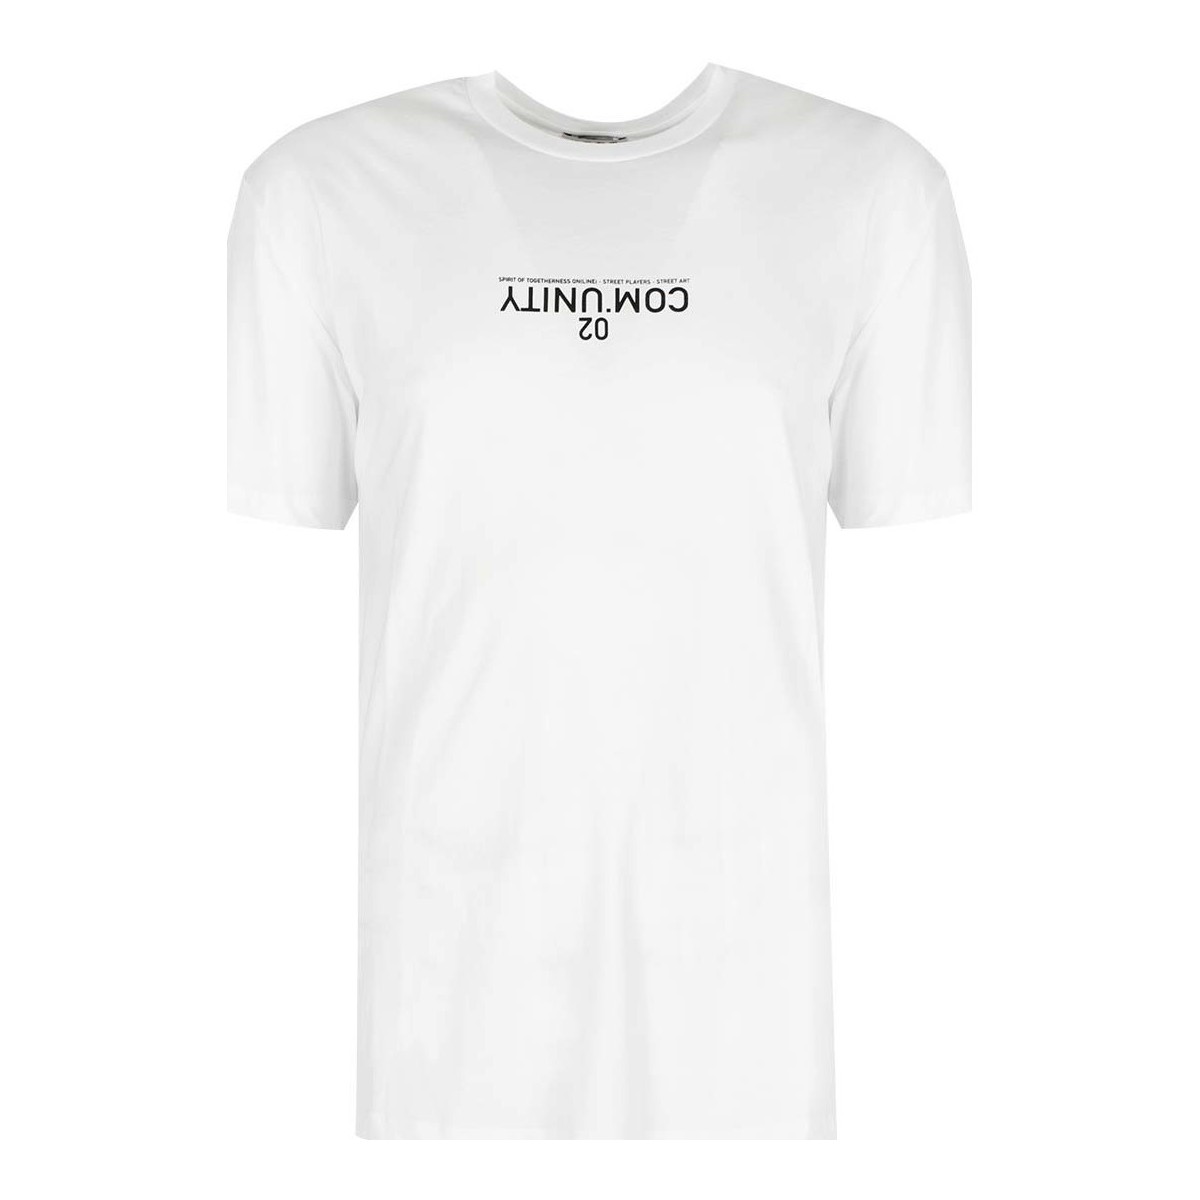 Oblačila Moški Majice s kratkimi rokavi Les Hommes UHT251 700P | Reserved community Oversized T-Shirt Črna